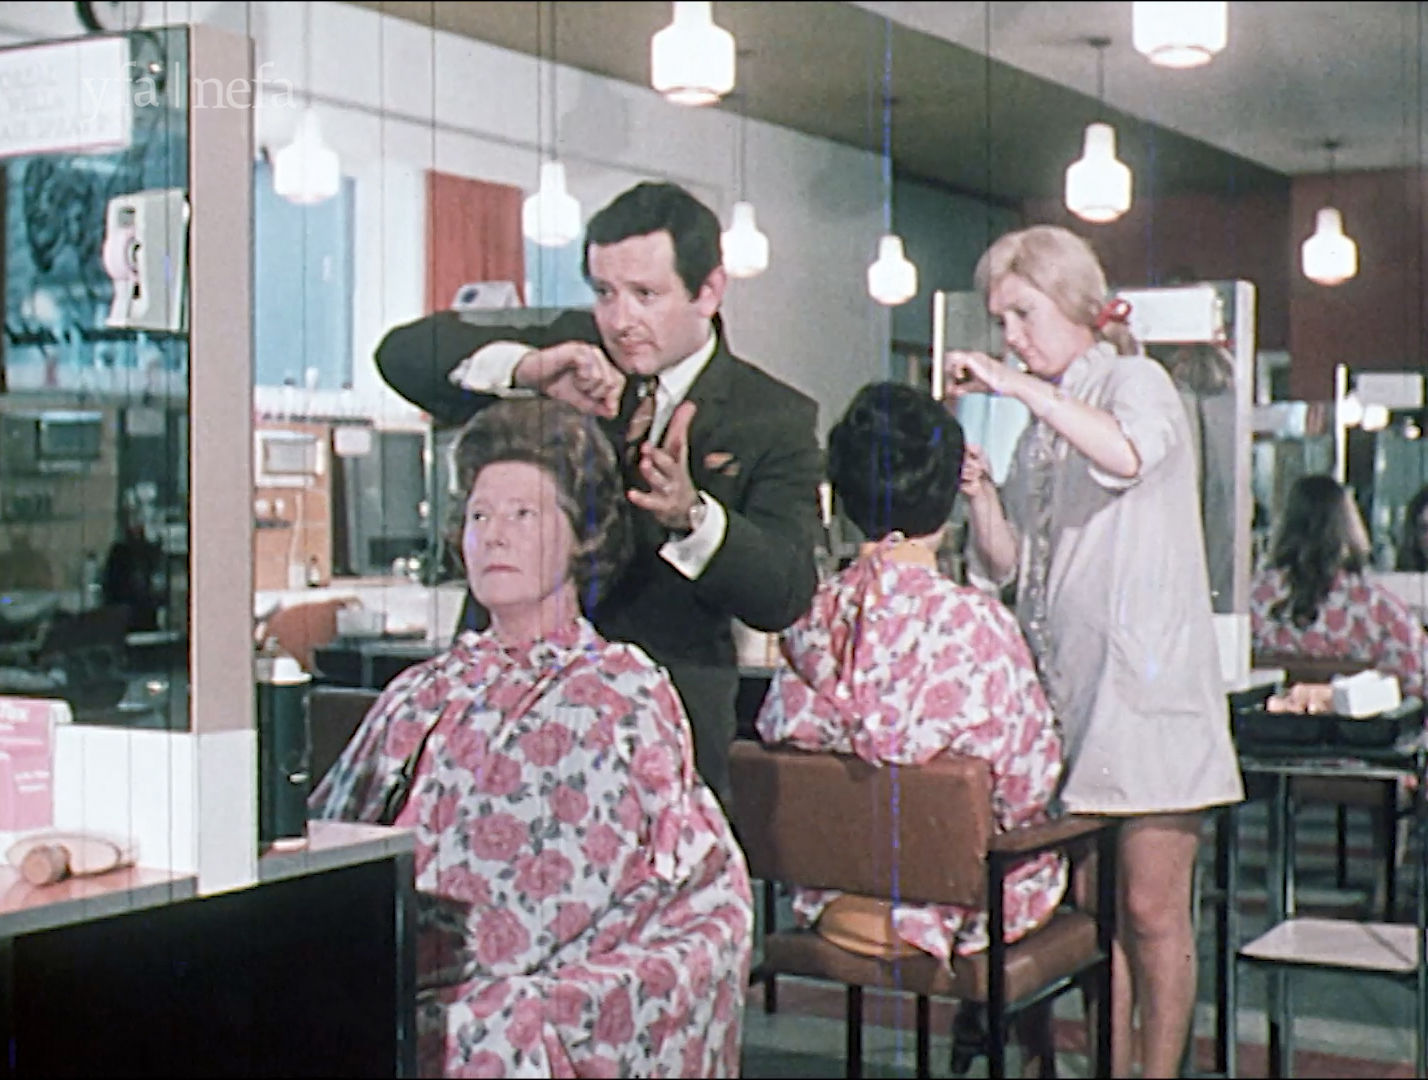 Harrogate Boardroom of the North - hairdressing salon 1970 (c) YFA